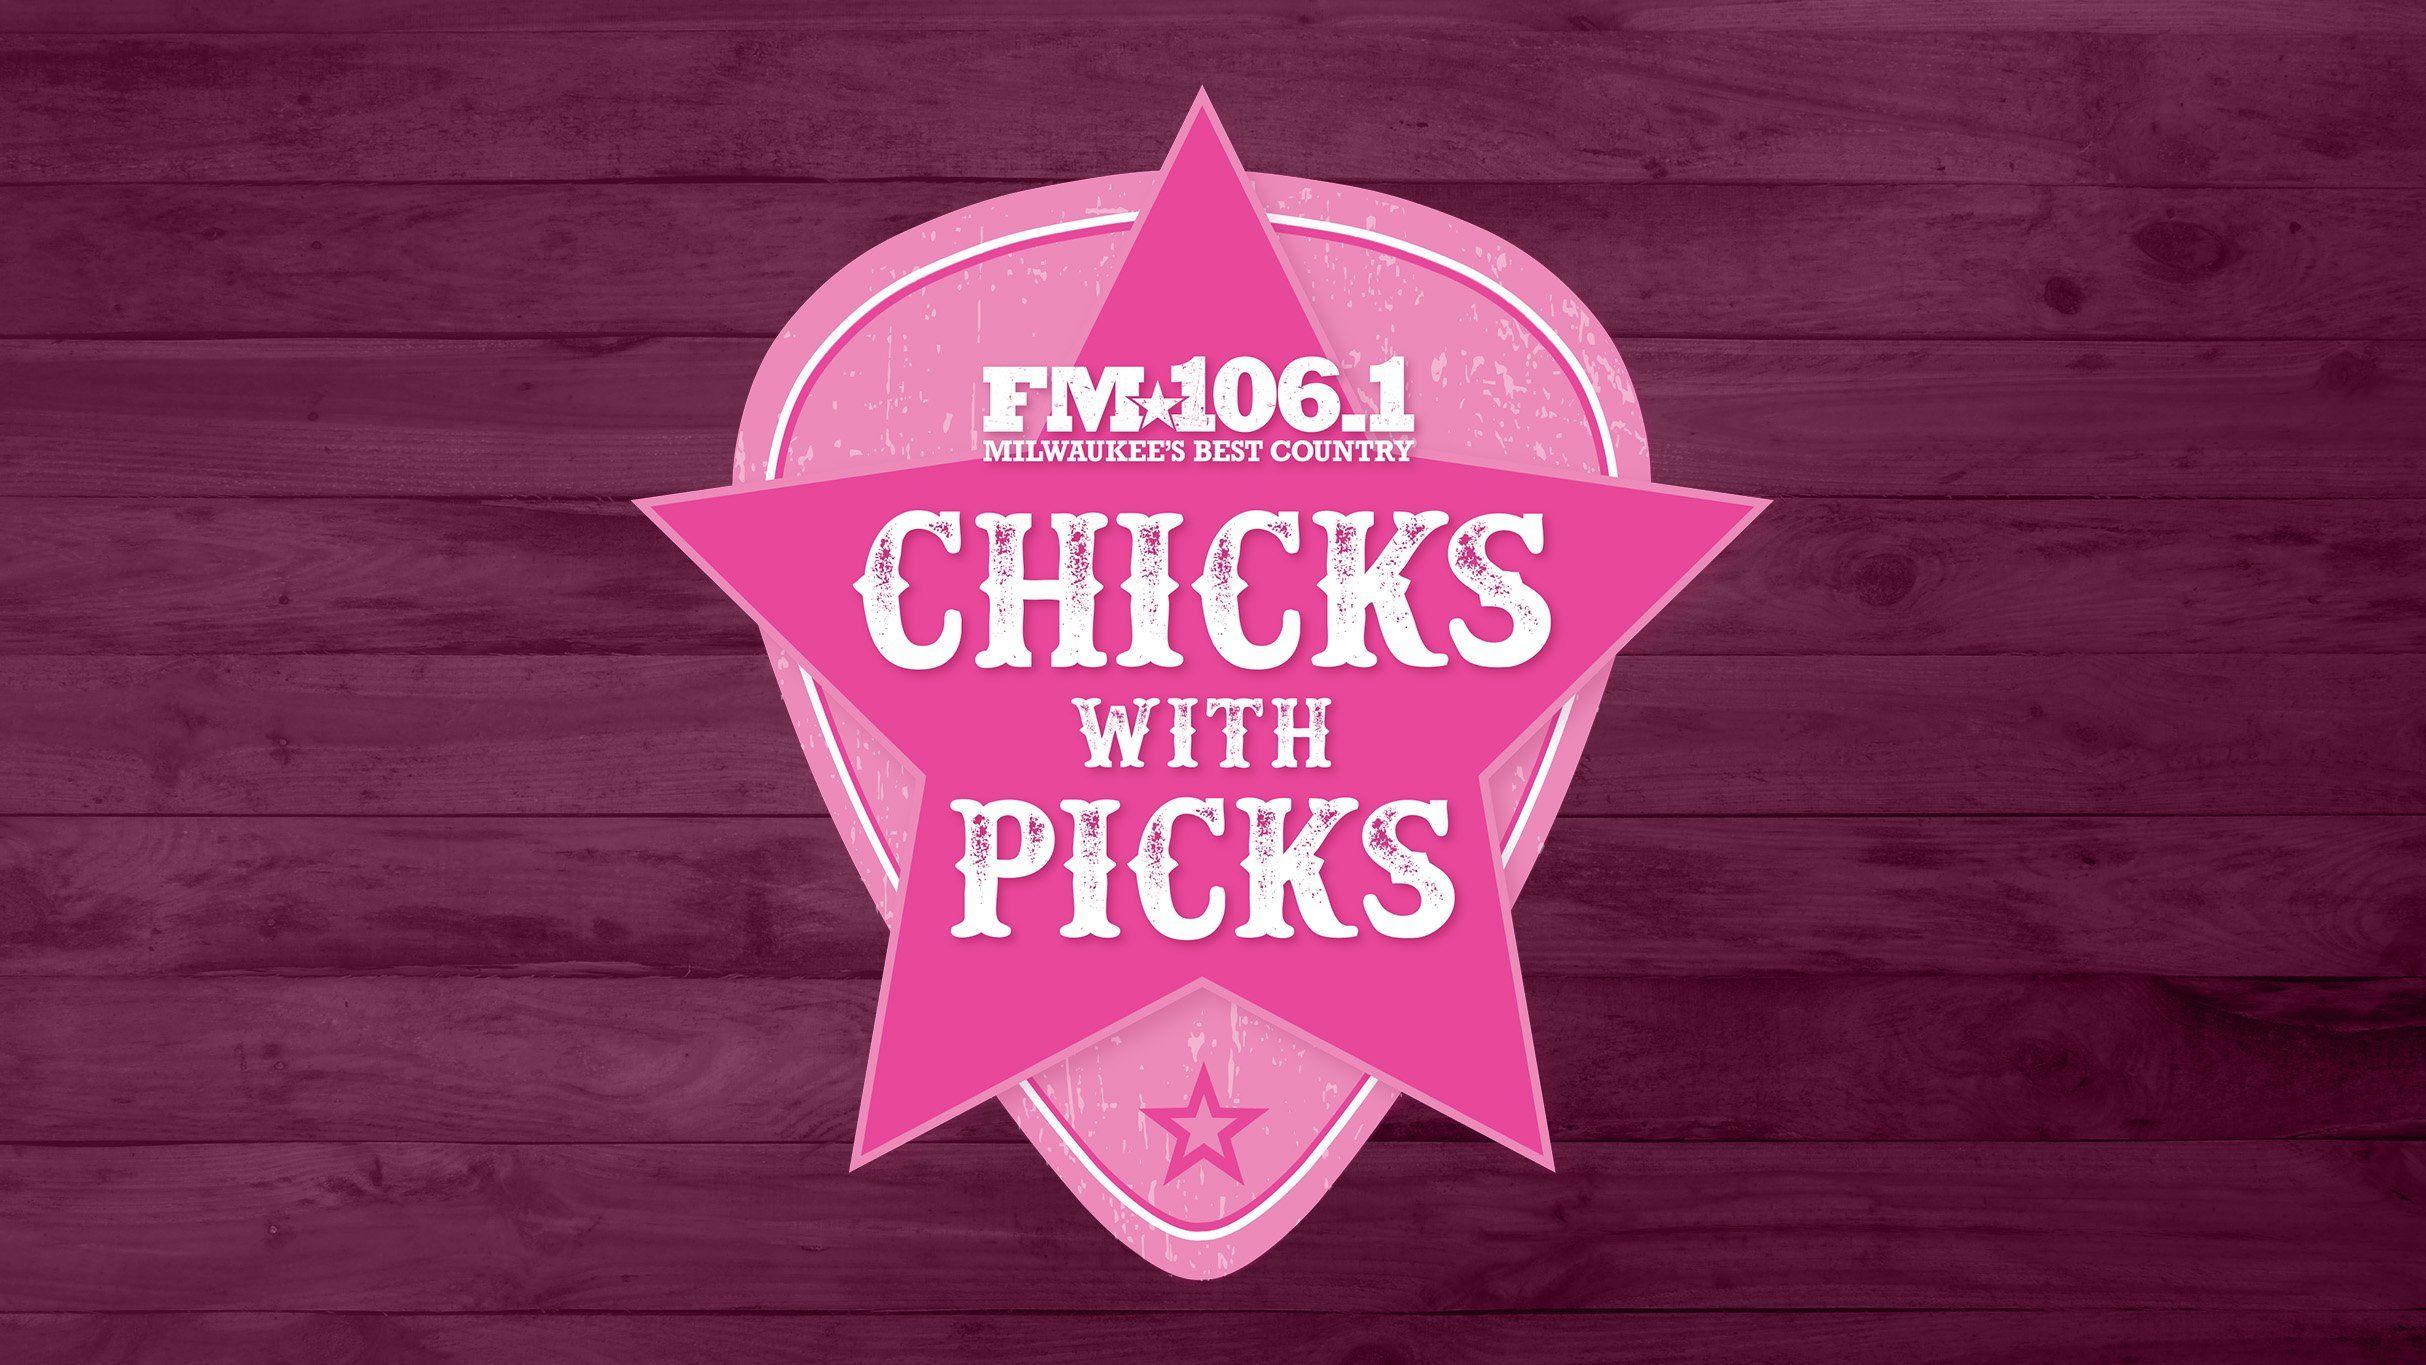 Milwaukee Chicks Logo - FM106.1 CHICKS WITH PICKS - Potawatomi Hotel & Casino